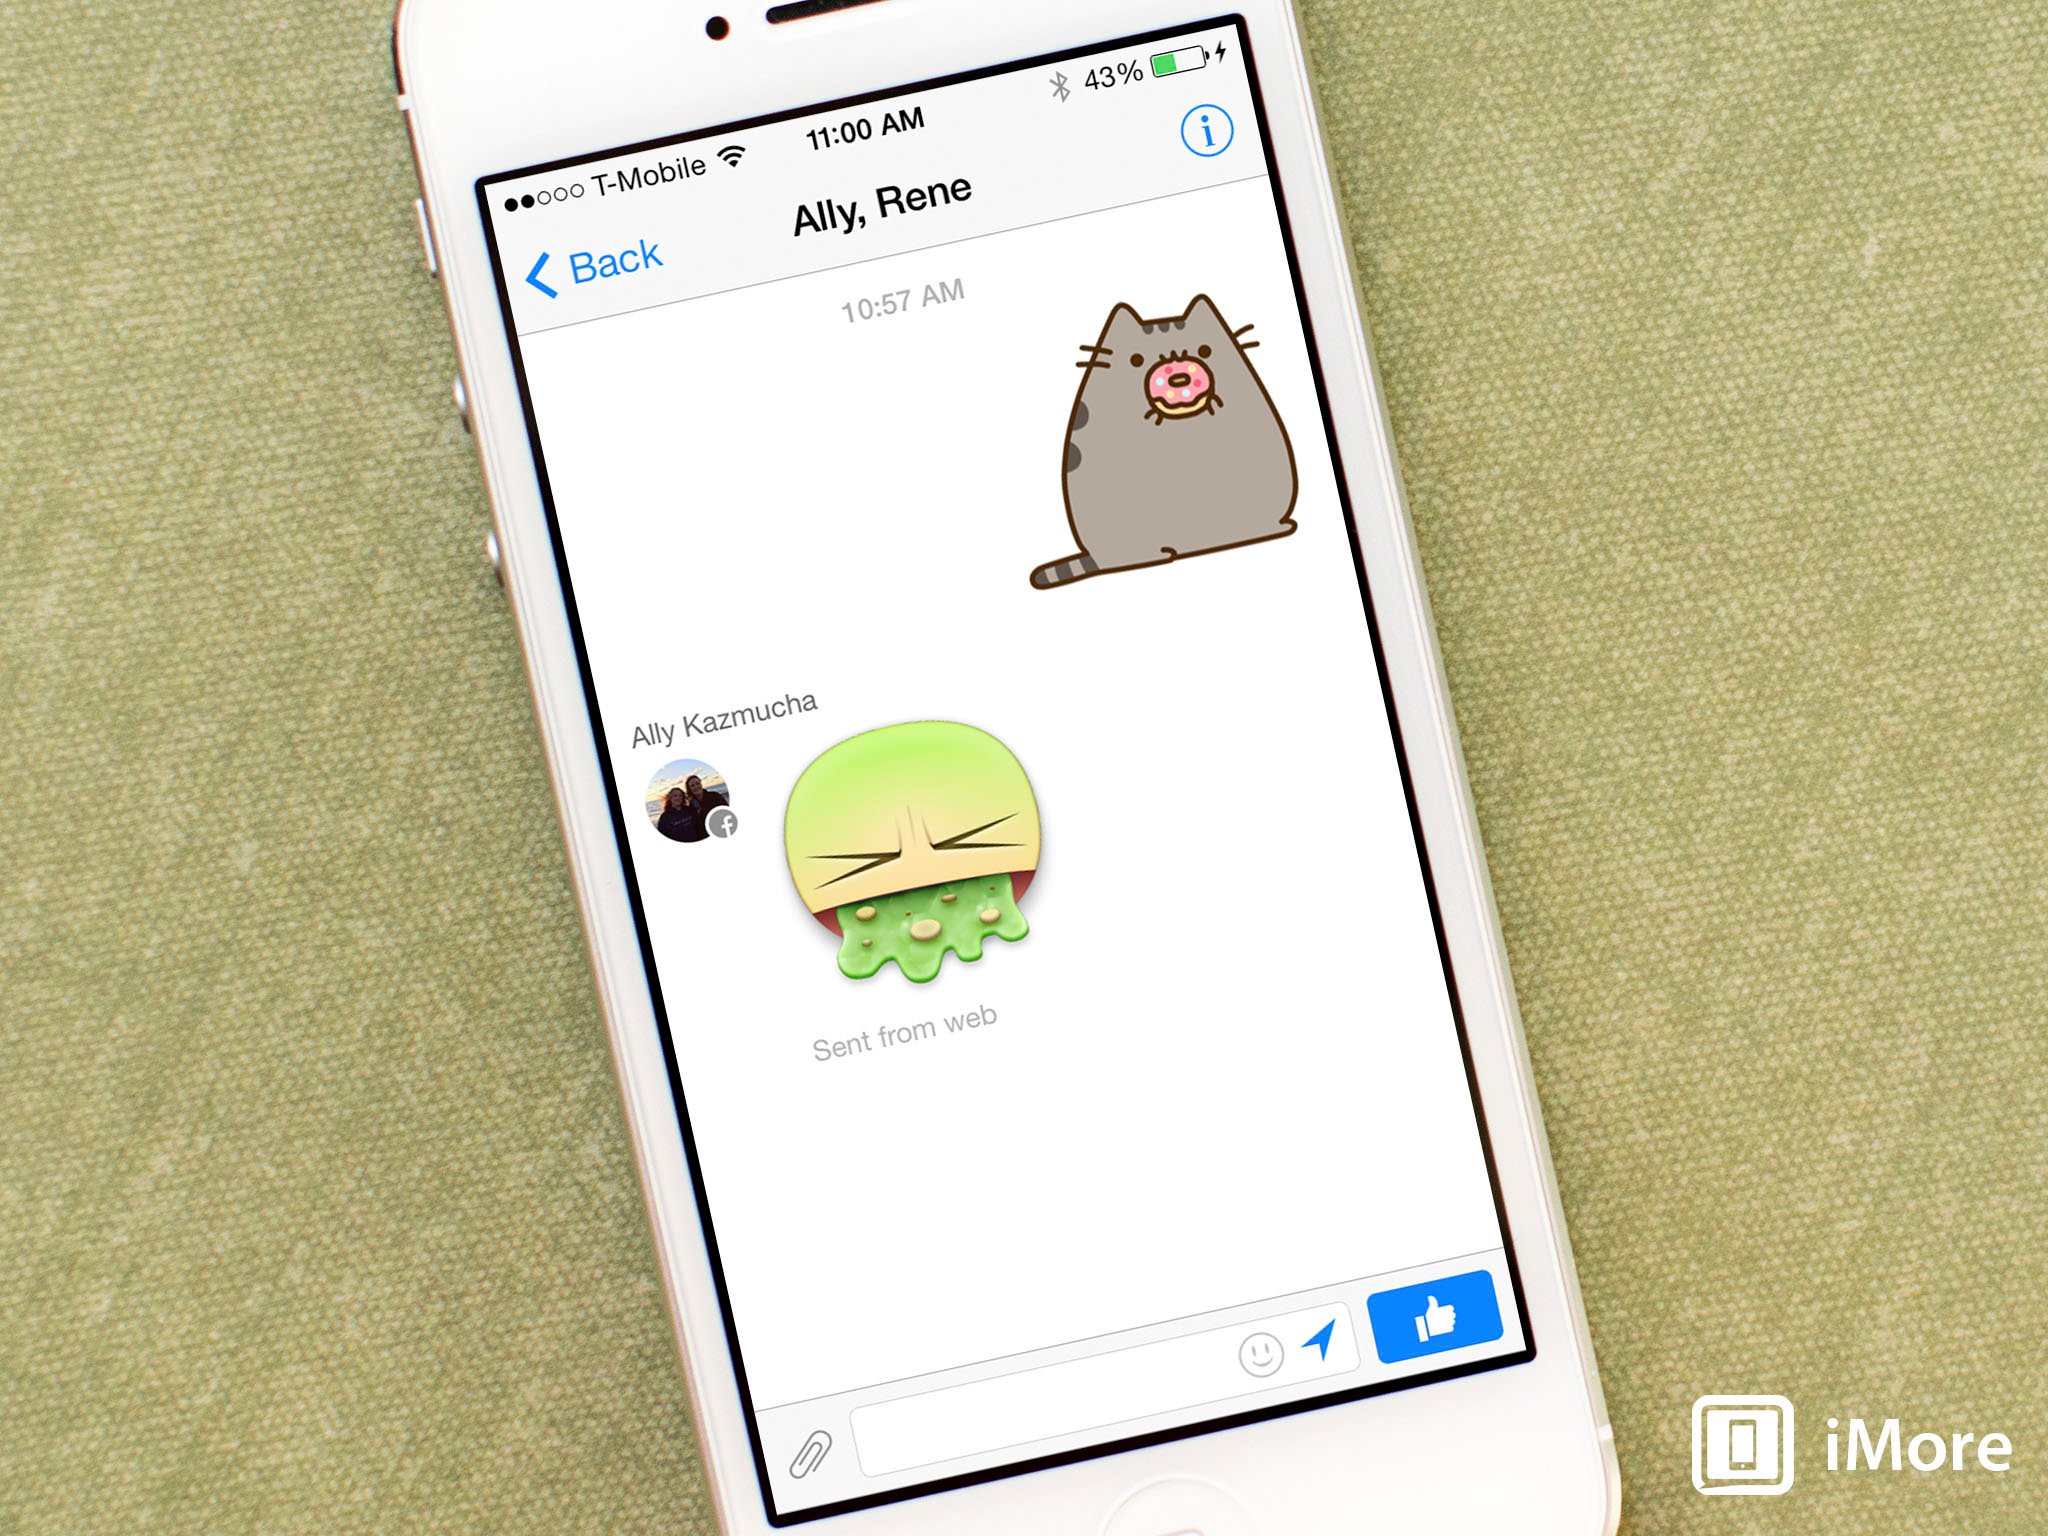 Facebook Messenger gets iOS 7 makeover, more